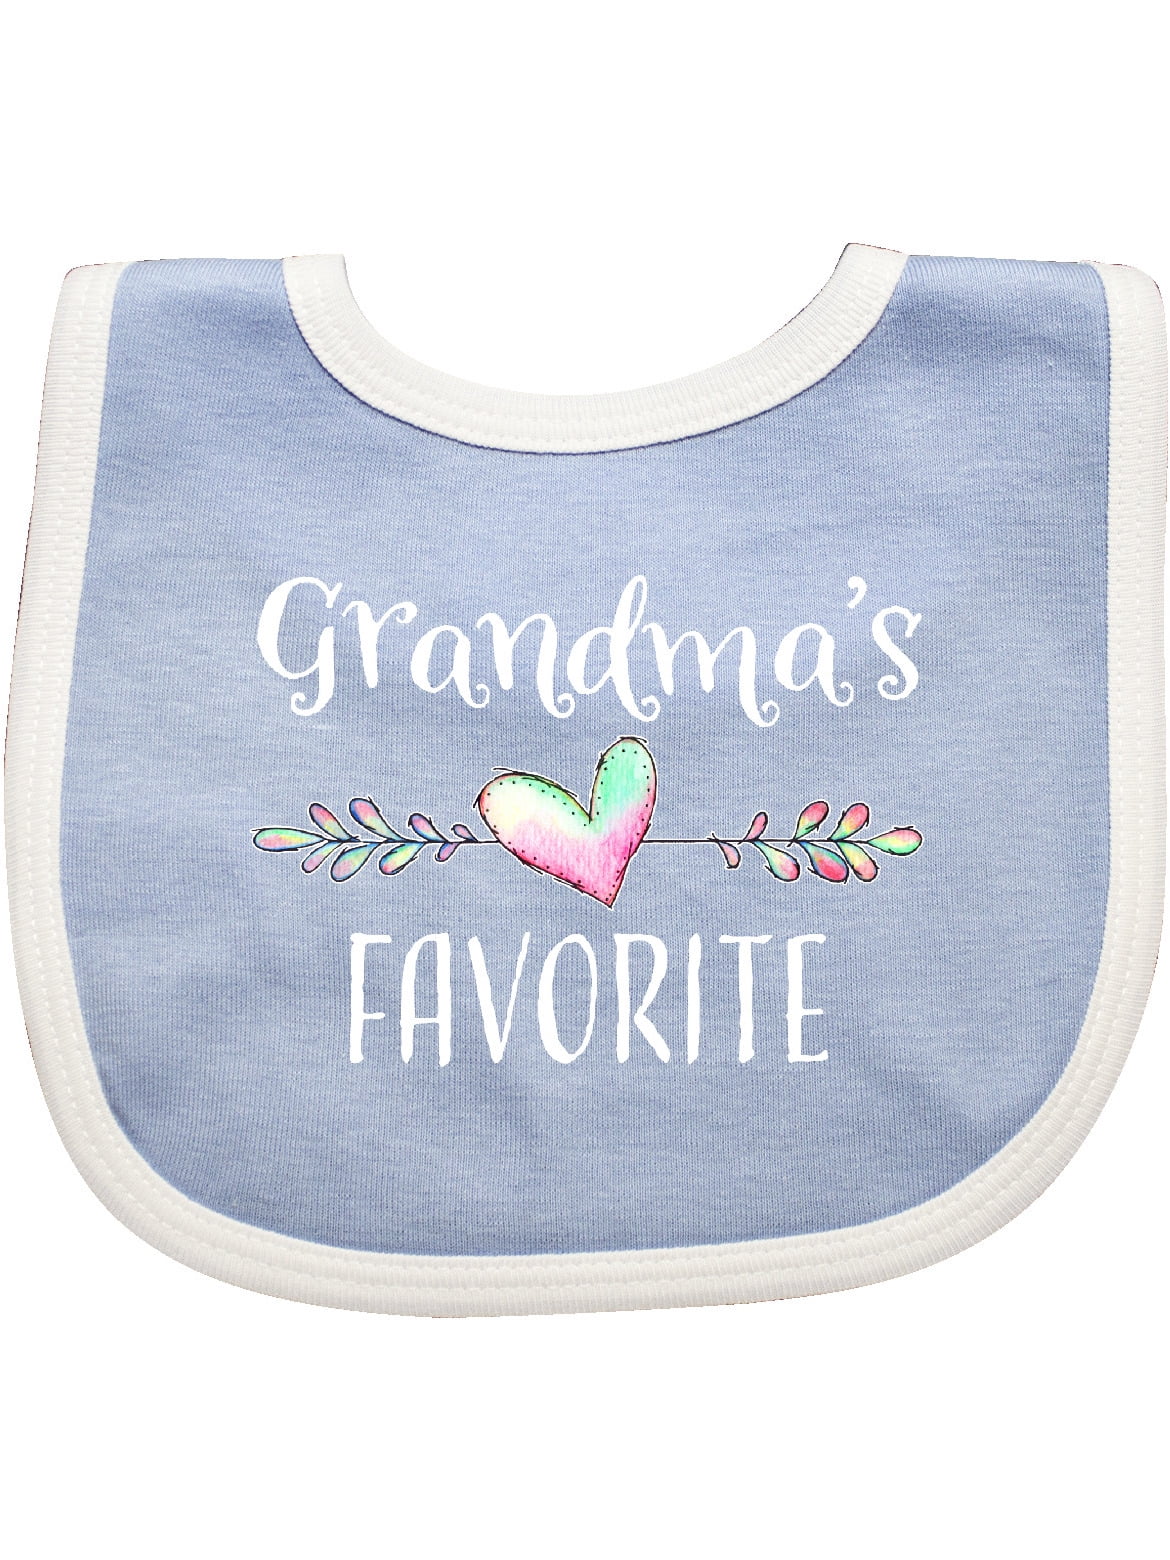 Grandmas Favorite- Heart Grandchild Baby Bib - Walmart.com - Walmart.com